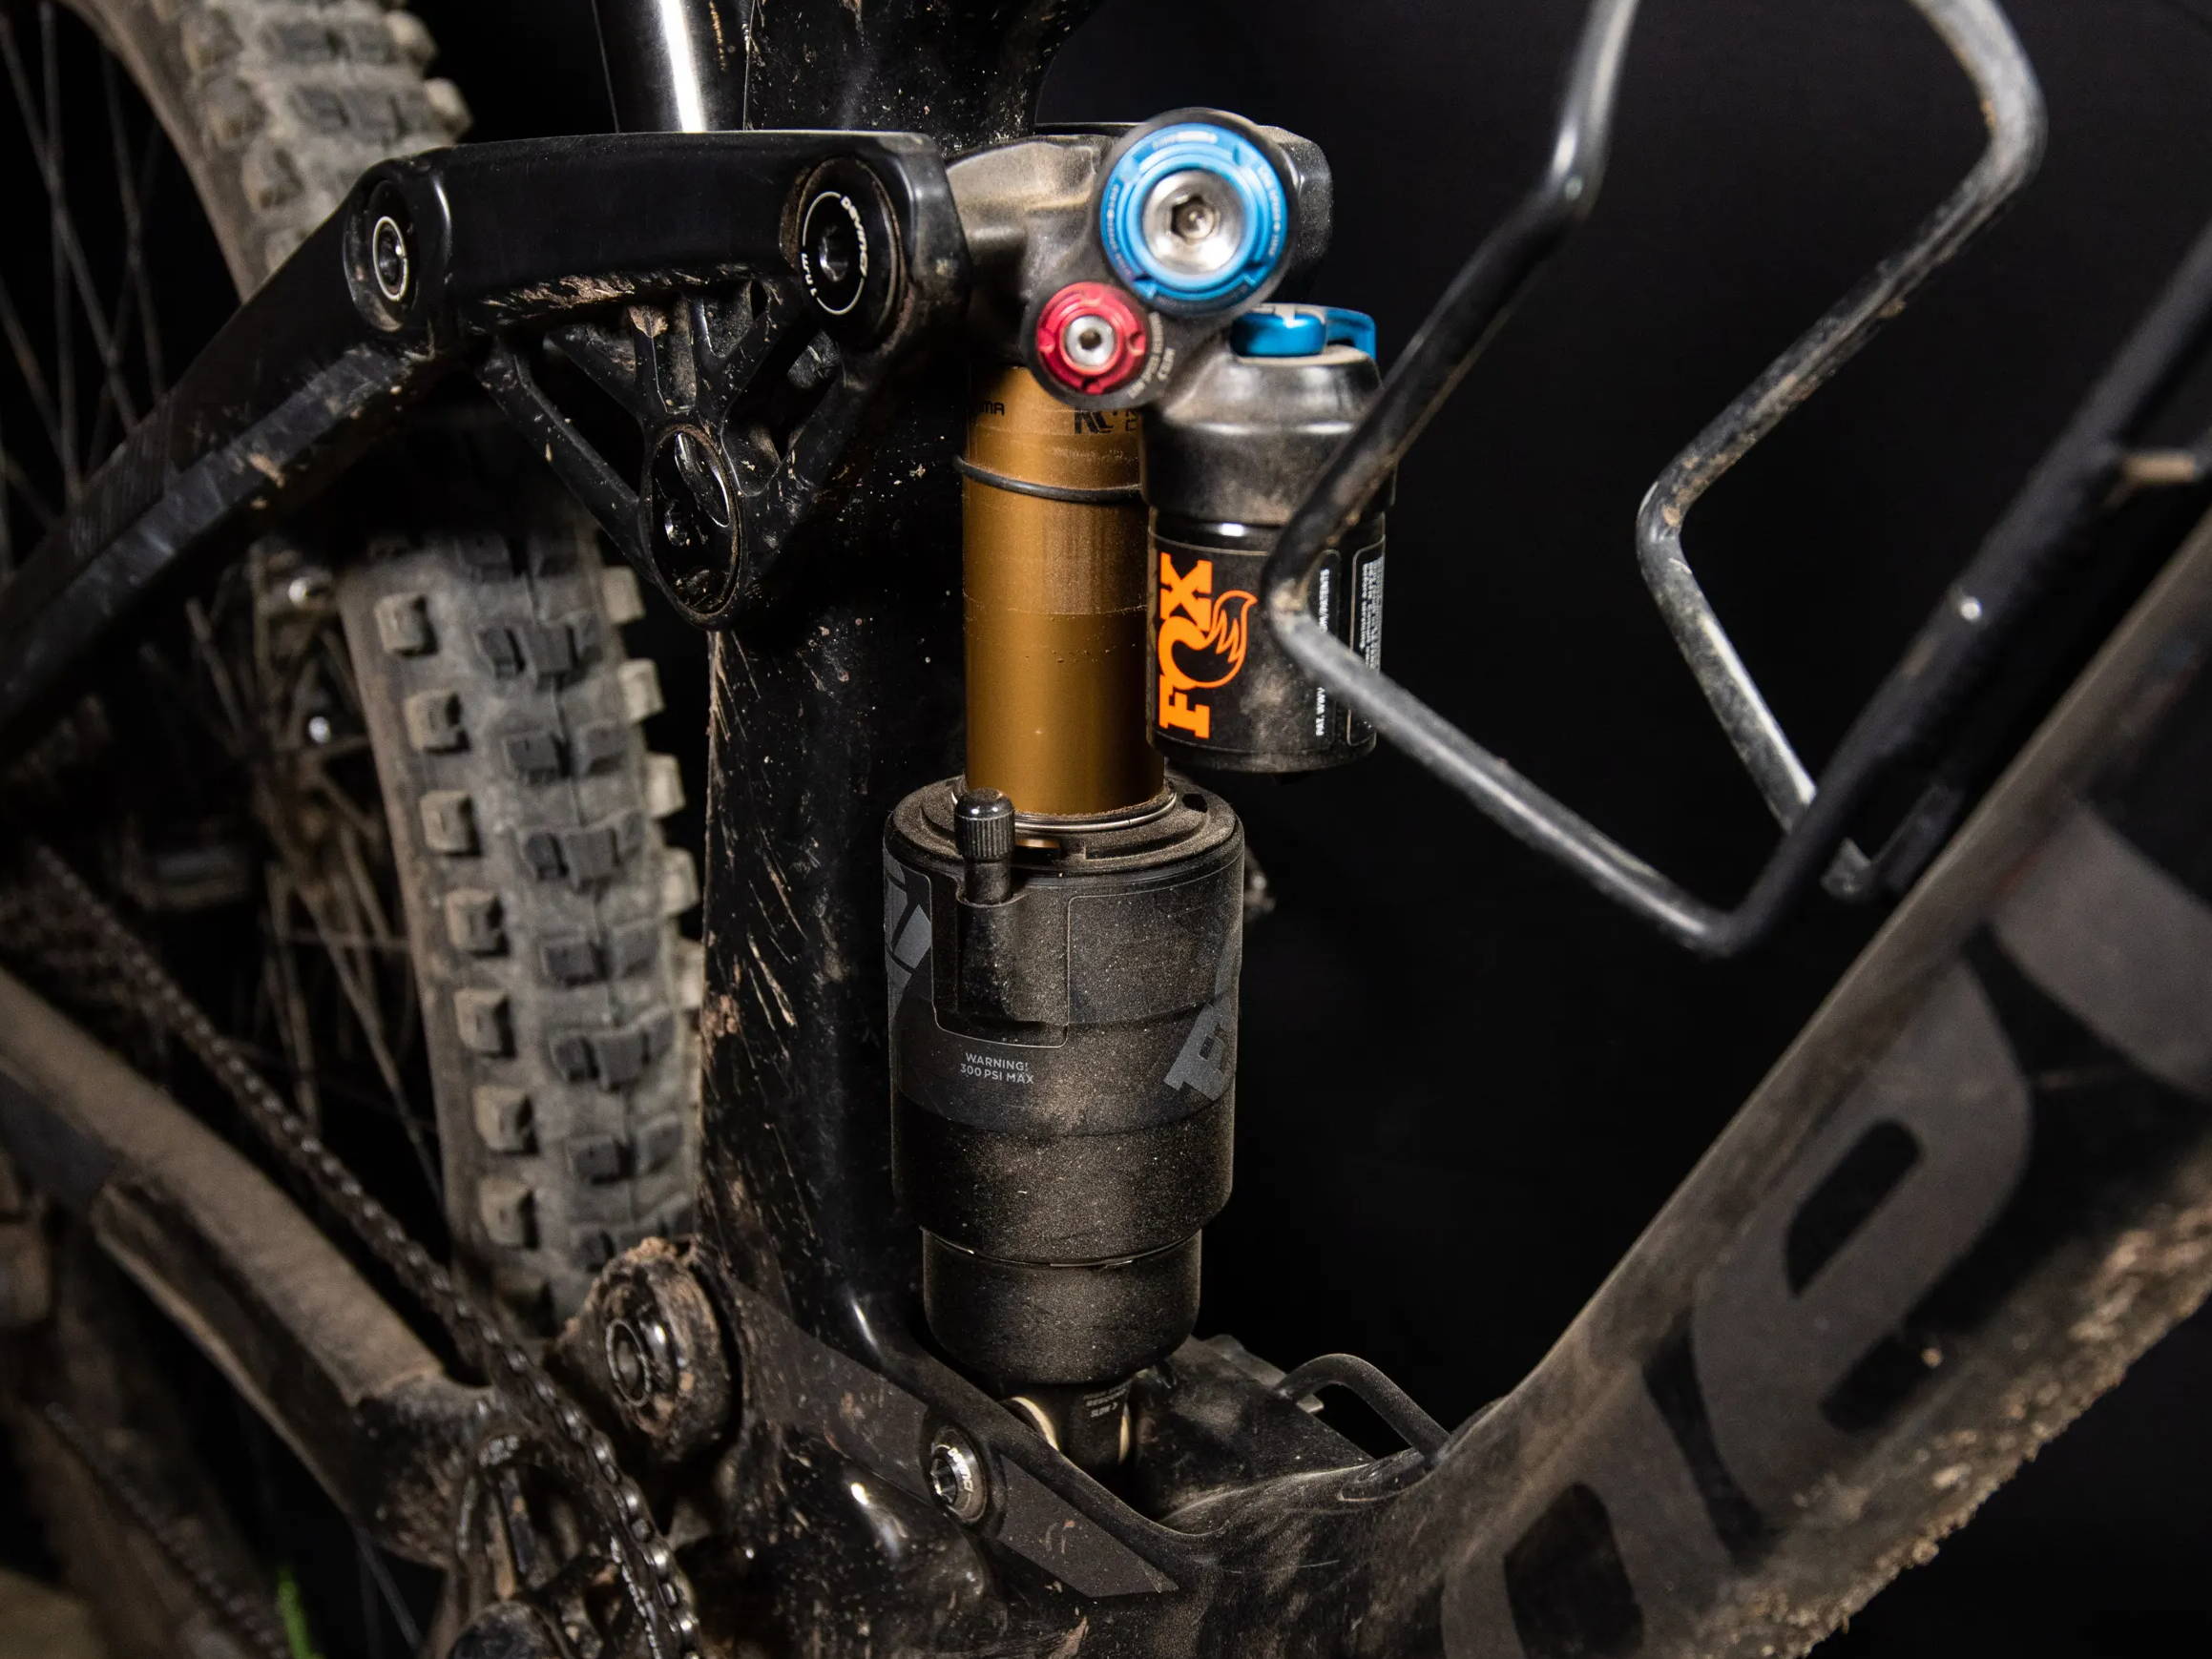 Fox Float X2 mountain bike rear shock installed on a Devinco Spartan